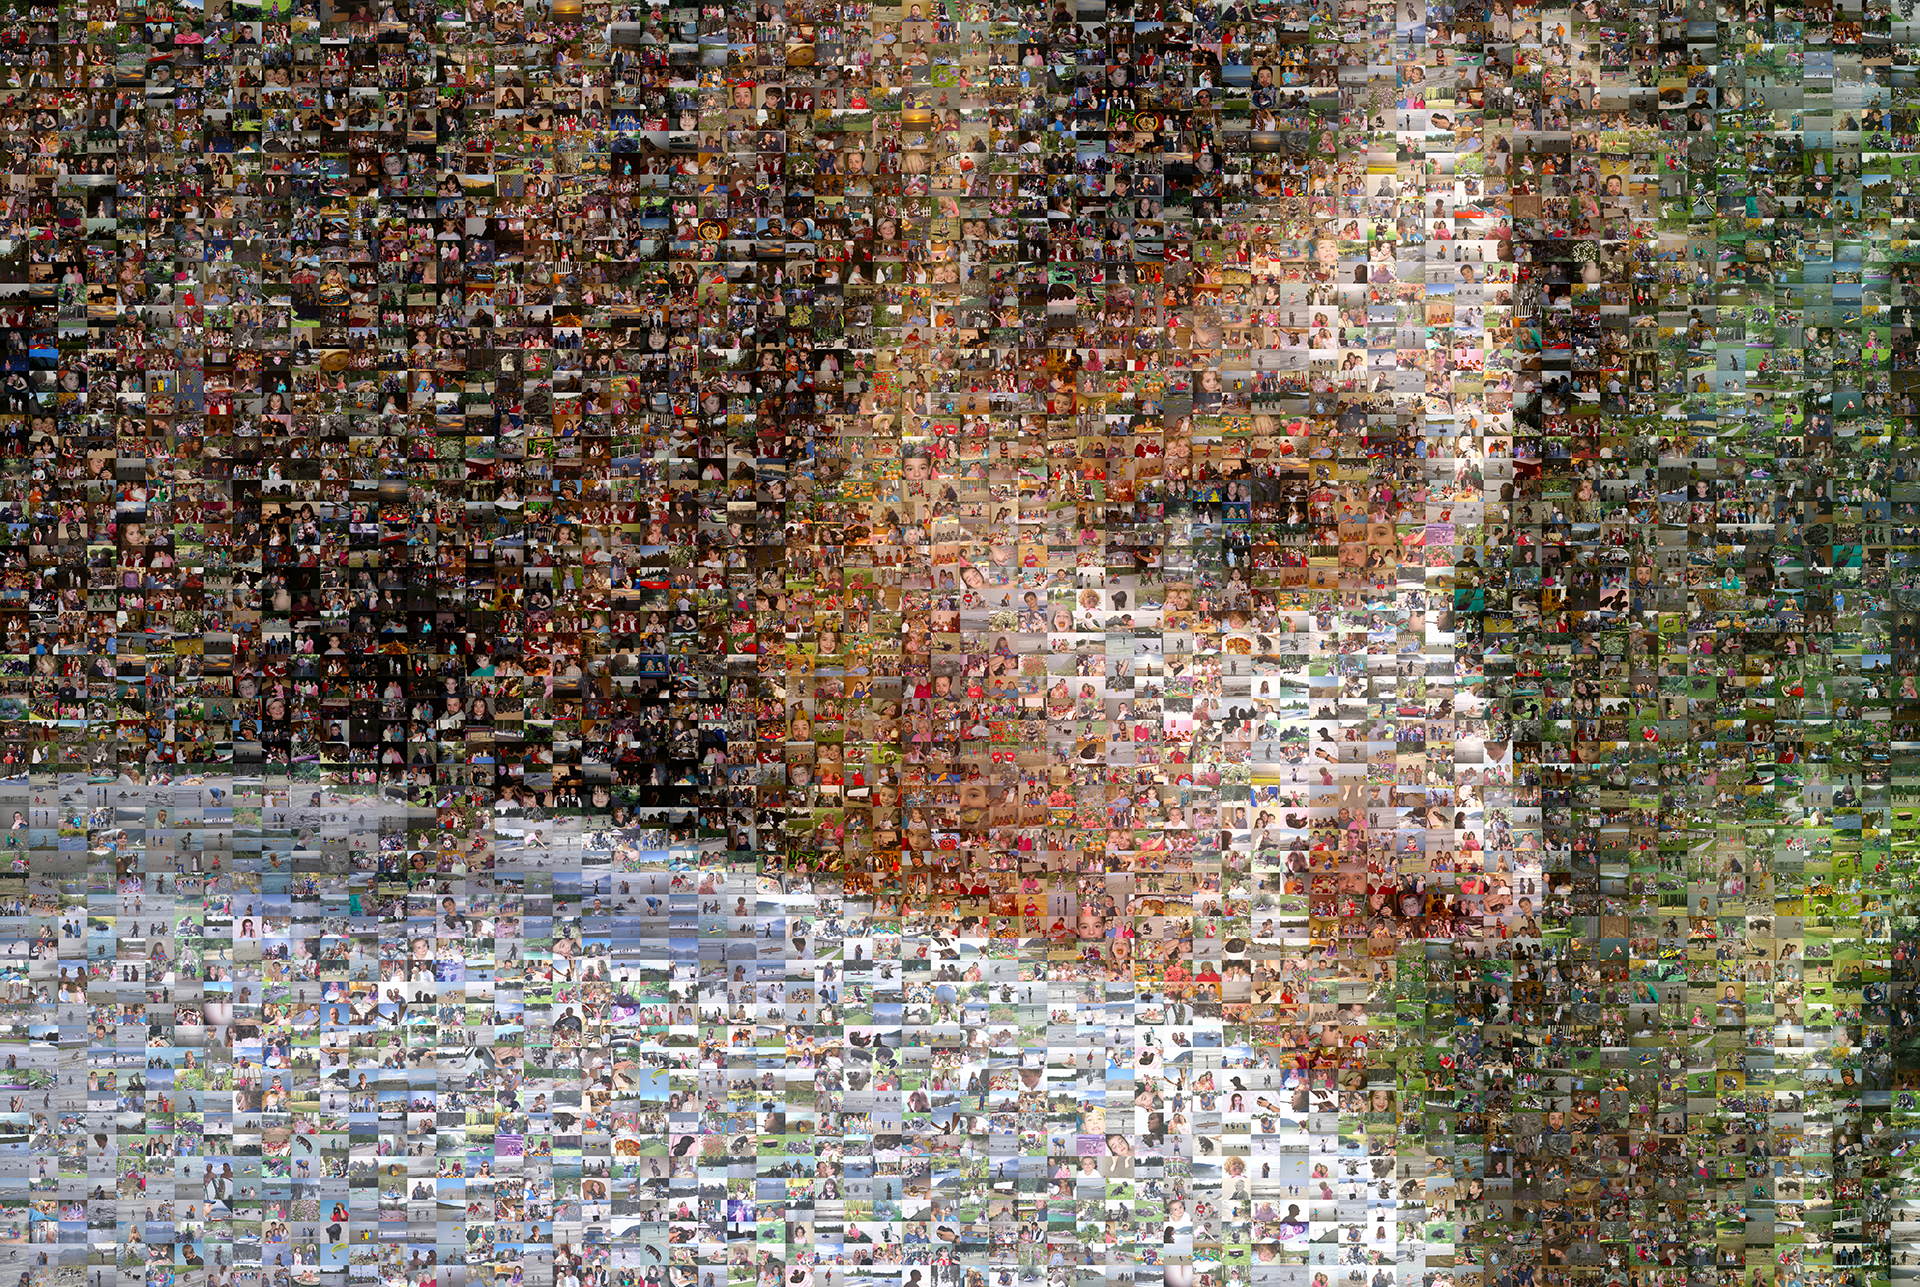 photo mosaic created using 2,278 customer selected photos